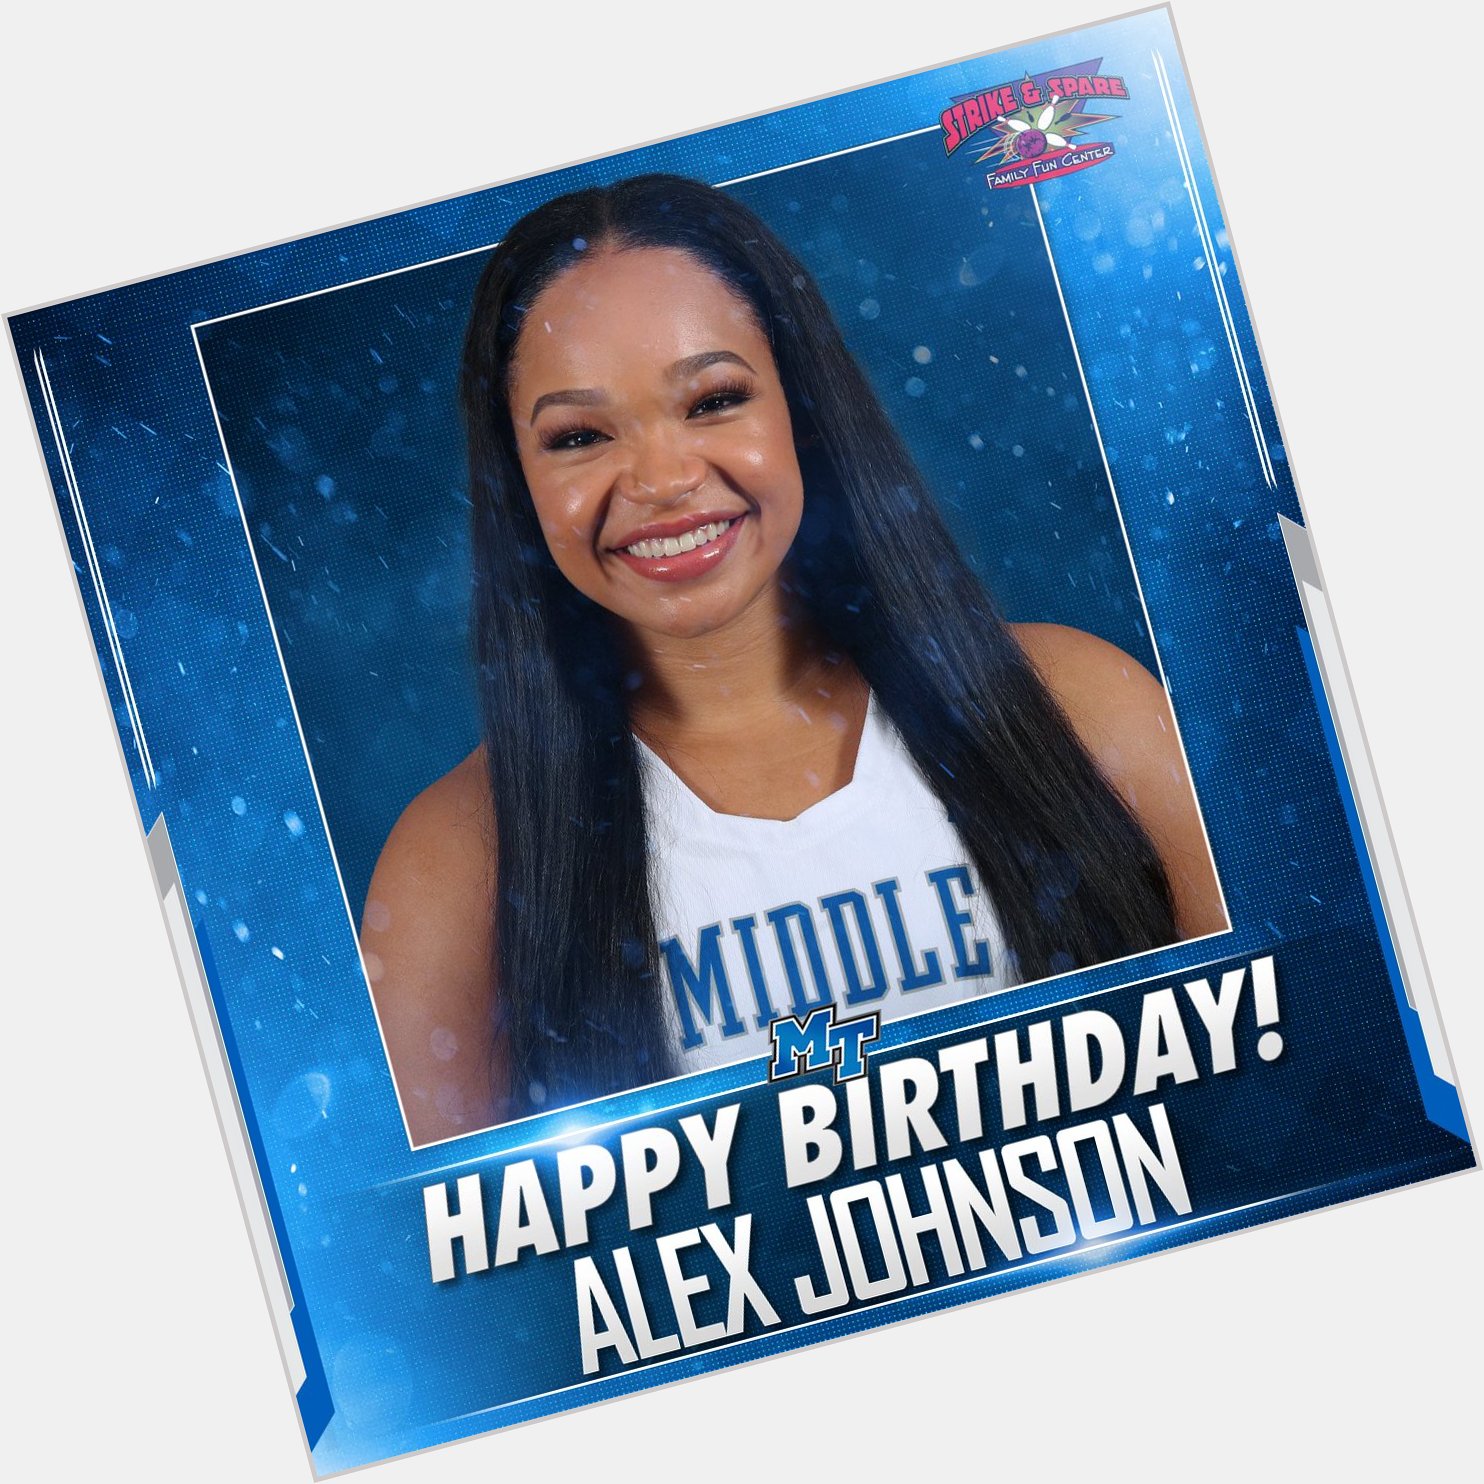 To wish Alex Johnson a Happy Birthday! 